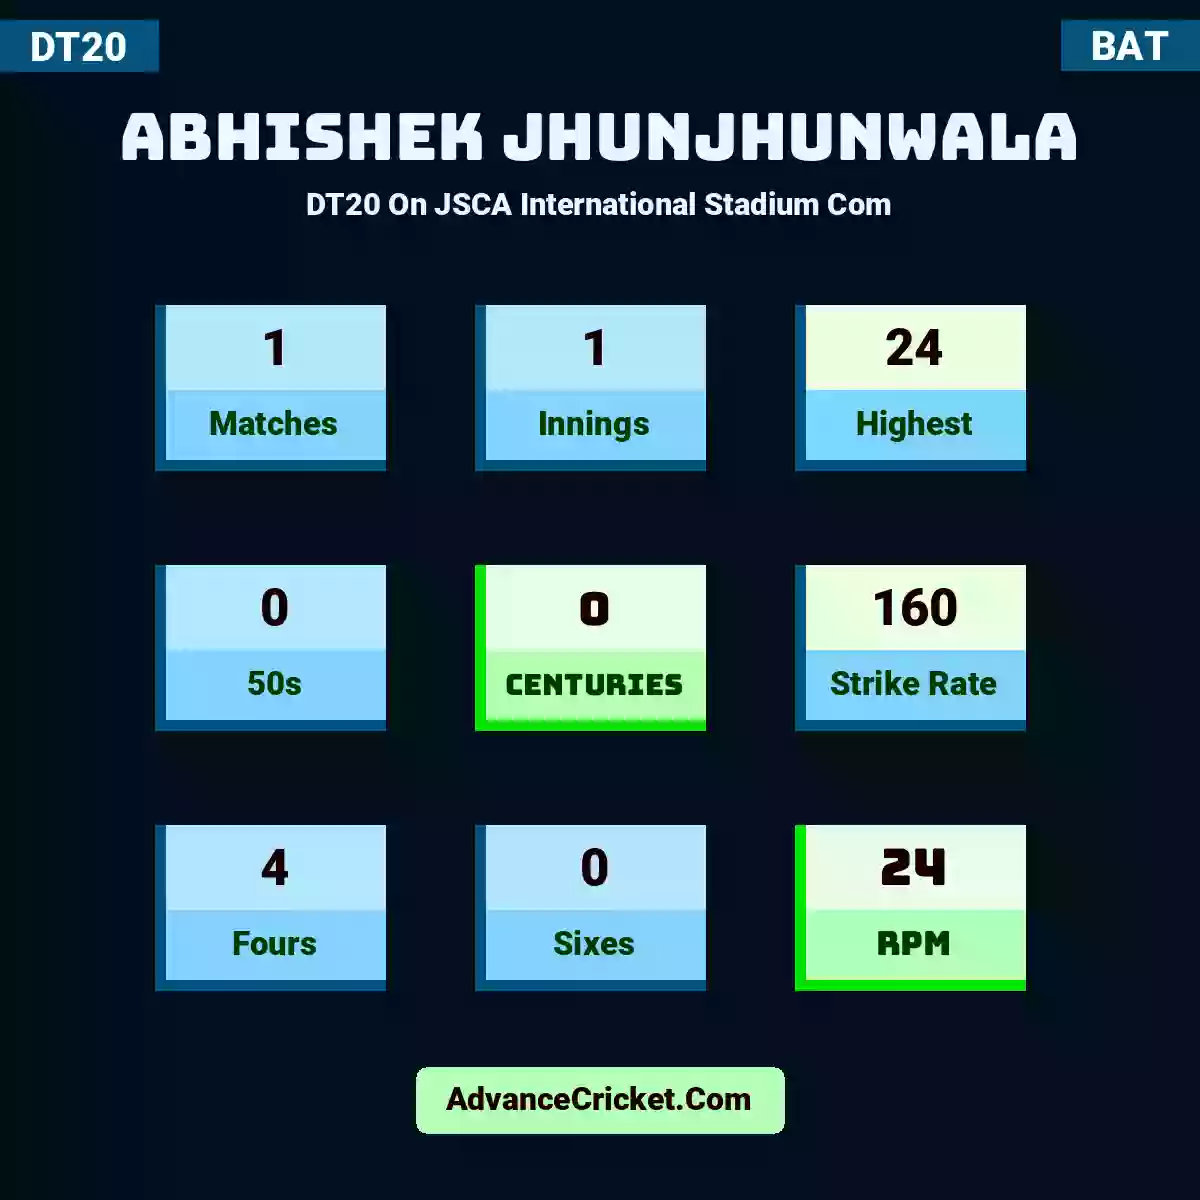 Abhishek Jhunjhunwala DT20  On JSCA International Stadium Com, Abhishek Jhunjhunwala played 1 matches, scored 24 runs as highest, 0 half-centuries, and 0 centuries, with a strike rate of 160. A.Jhunjhunwala hit 4 fours and 0 sixes, with an RPM of 24.